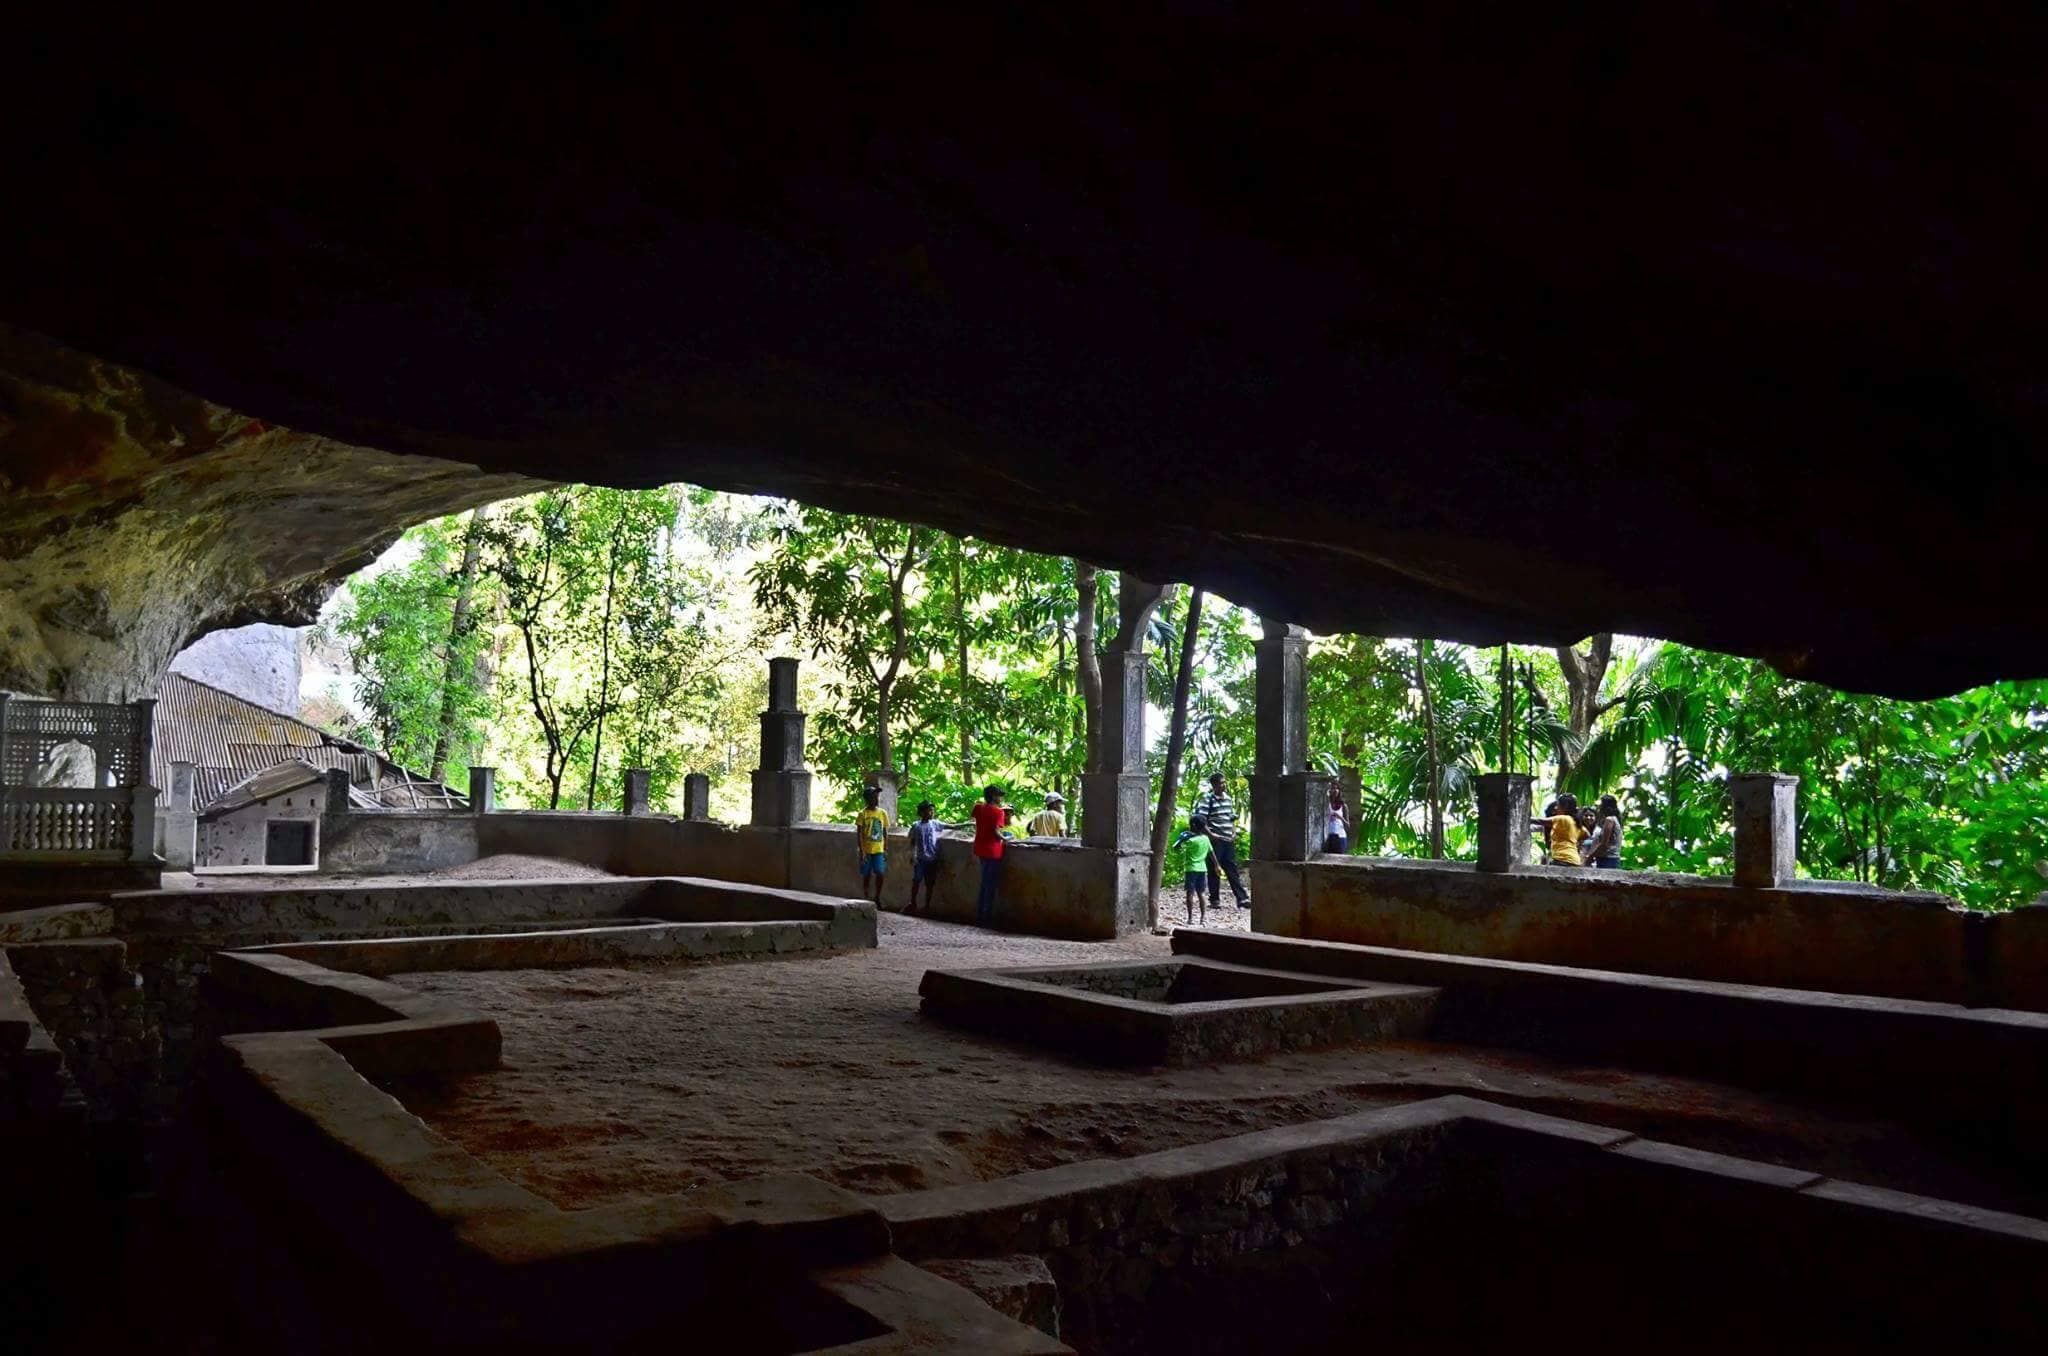 La cueva Beli Lena que explora la antigua forma de vida del "Hombre Balangoda" (homosapien) en Kithulgala Sri Lanka